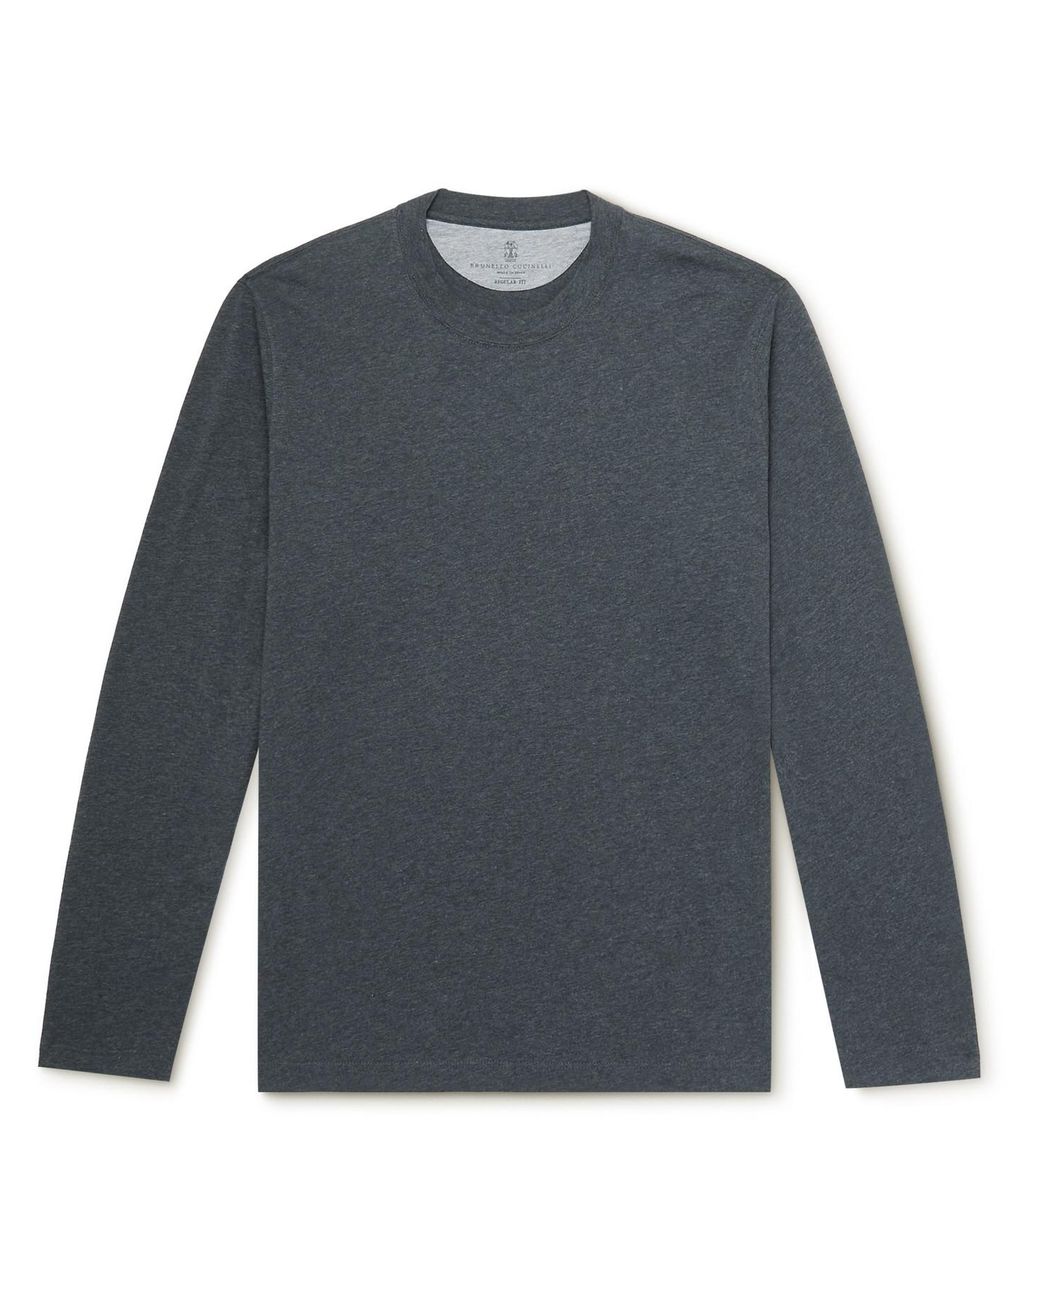 Brunello Cucinelli Cotton-jersey T-shirt in Gray for Men - Lyst